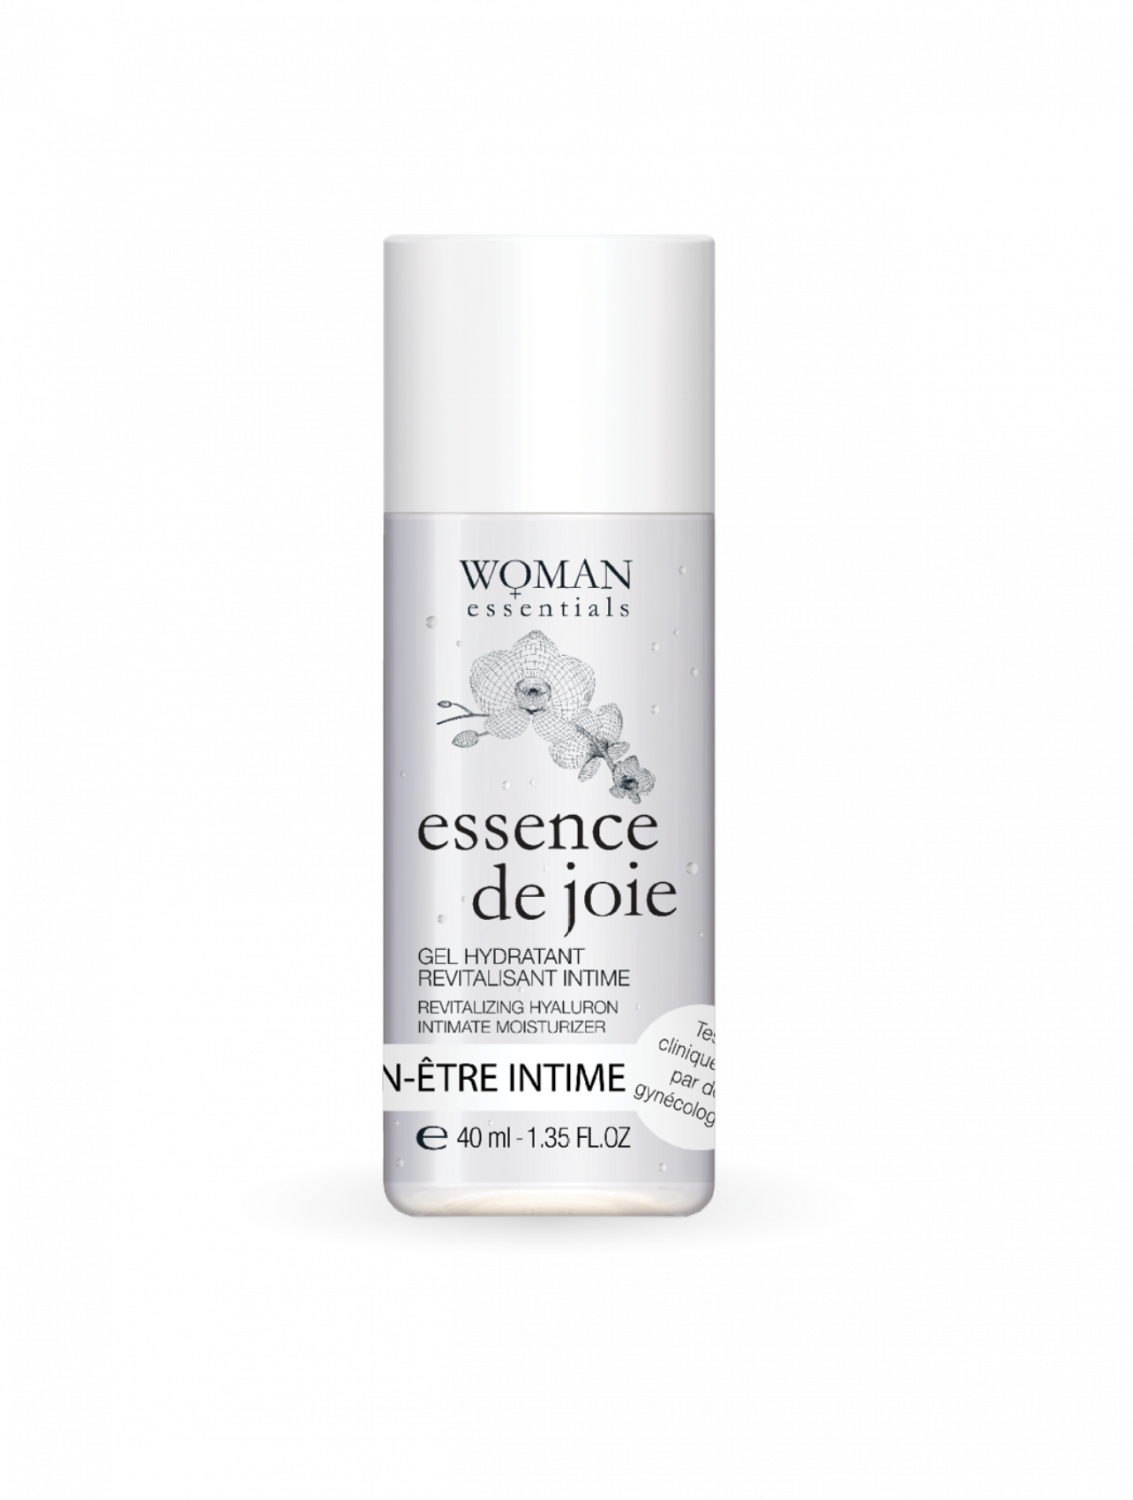 Woman Essentials Essence De Joie Hyaluron Revitalizing Moisture Gel 40ml - интернет-магазин профессиональной косметики Spadream, изображение 39245